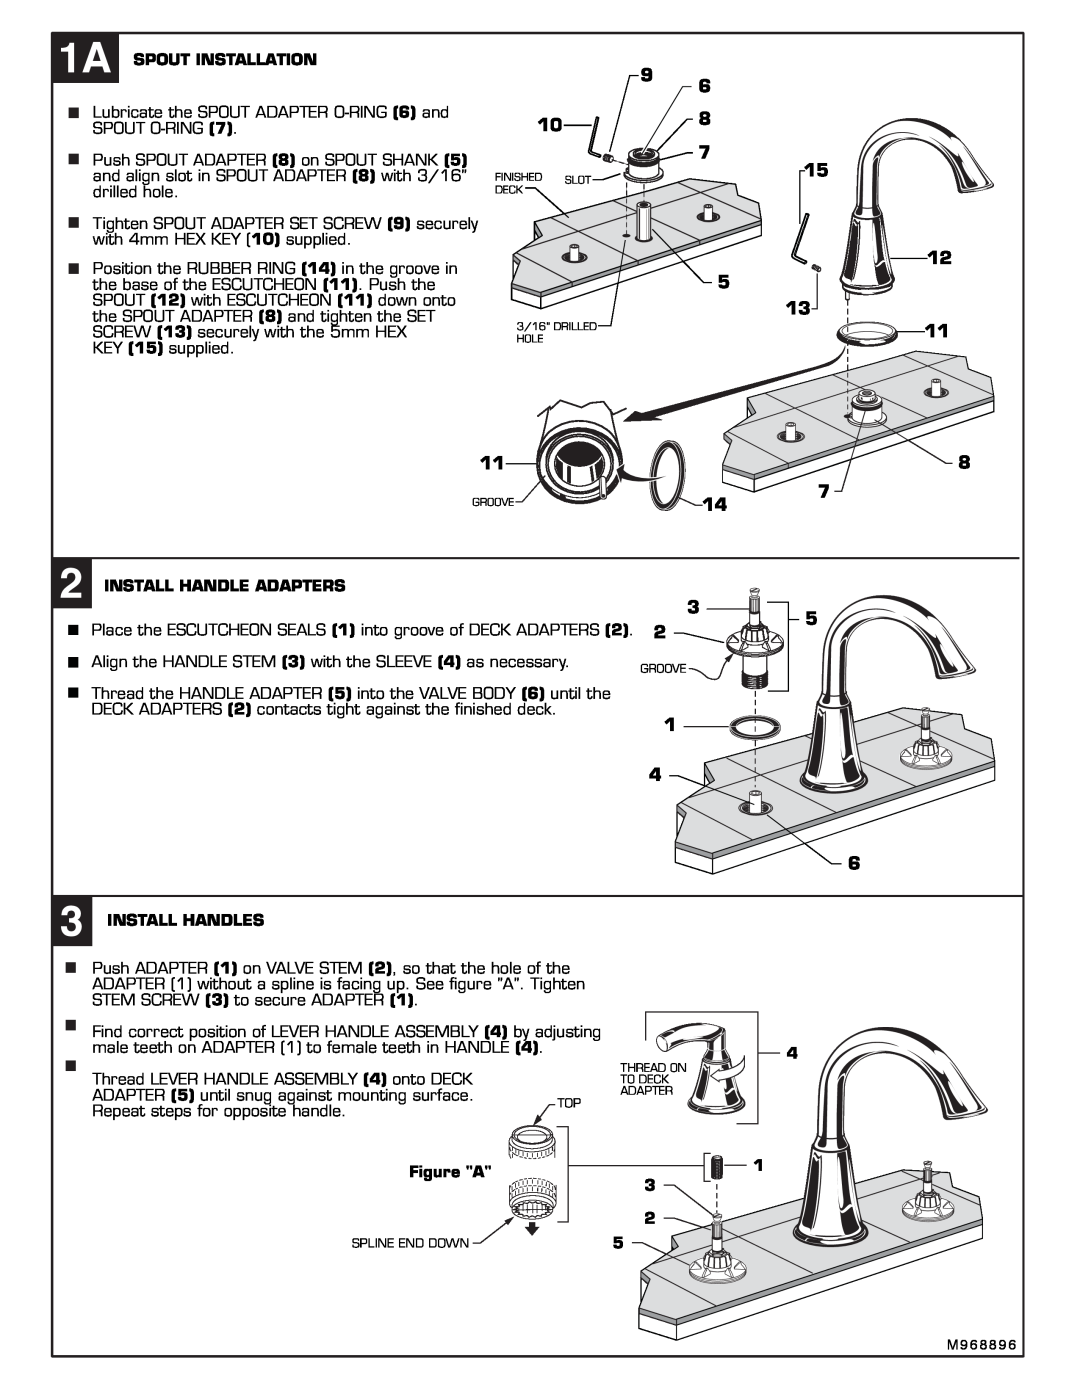 American Standard T038.900 installation instructions 